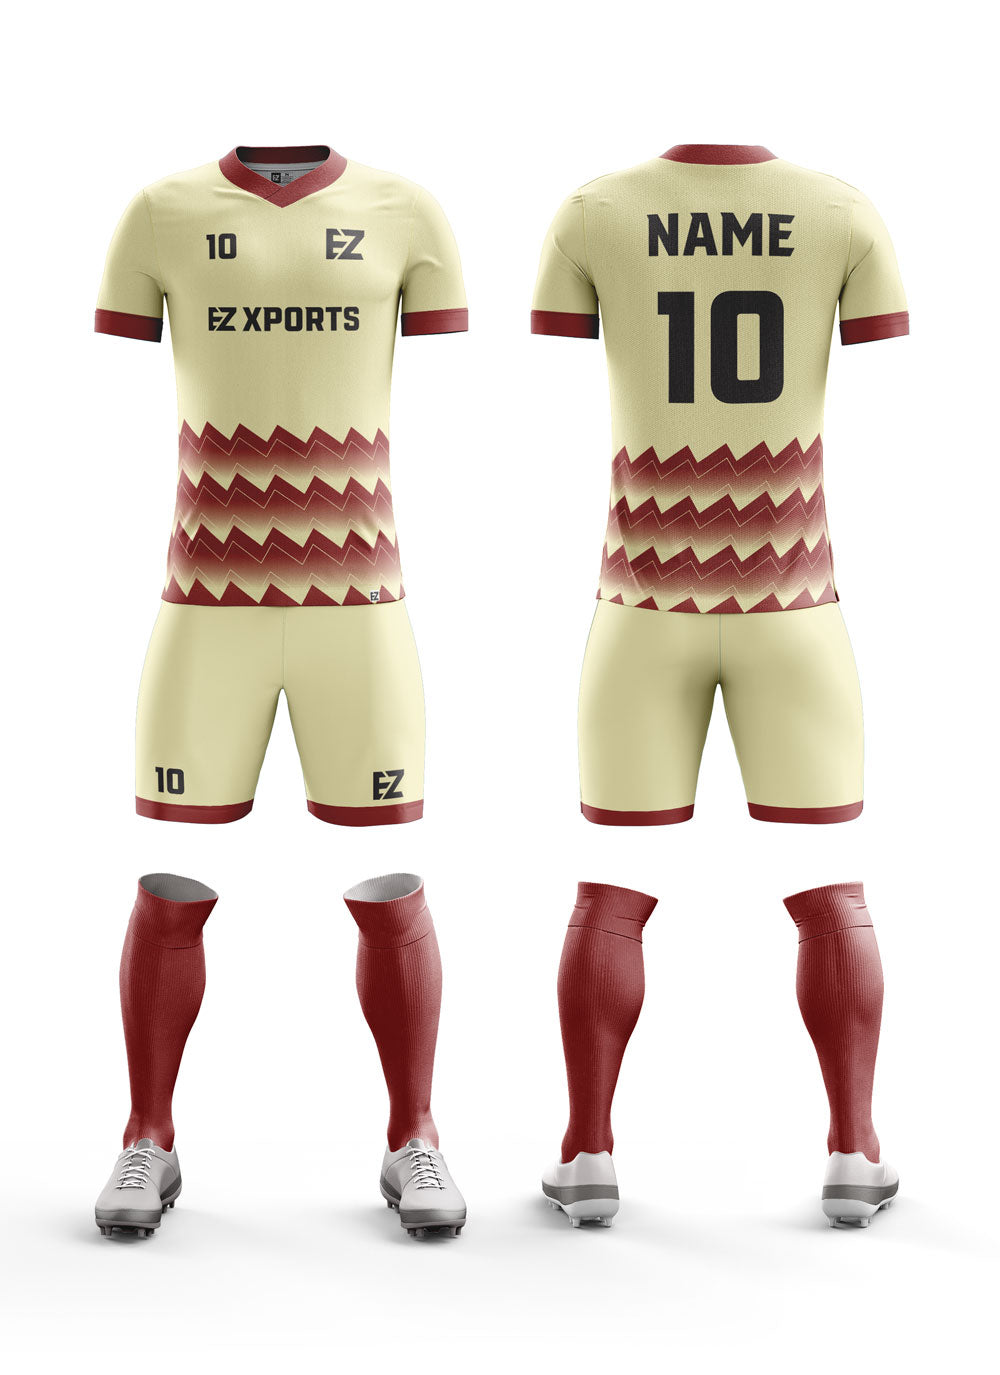 Personalized Soccer Uniform - A-18